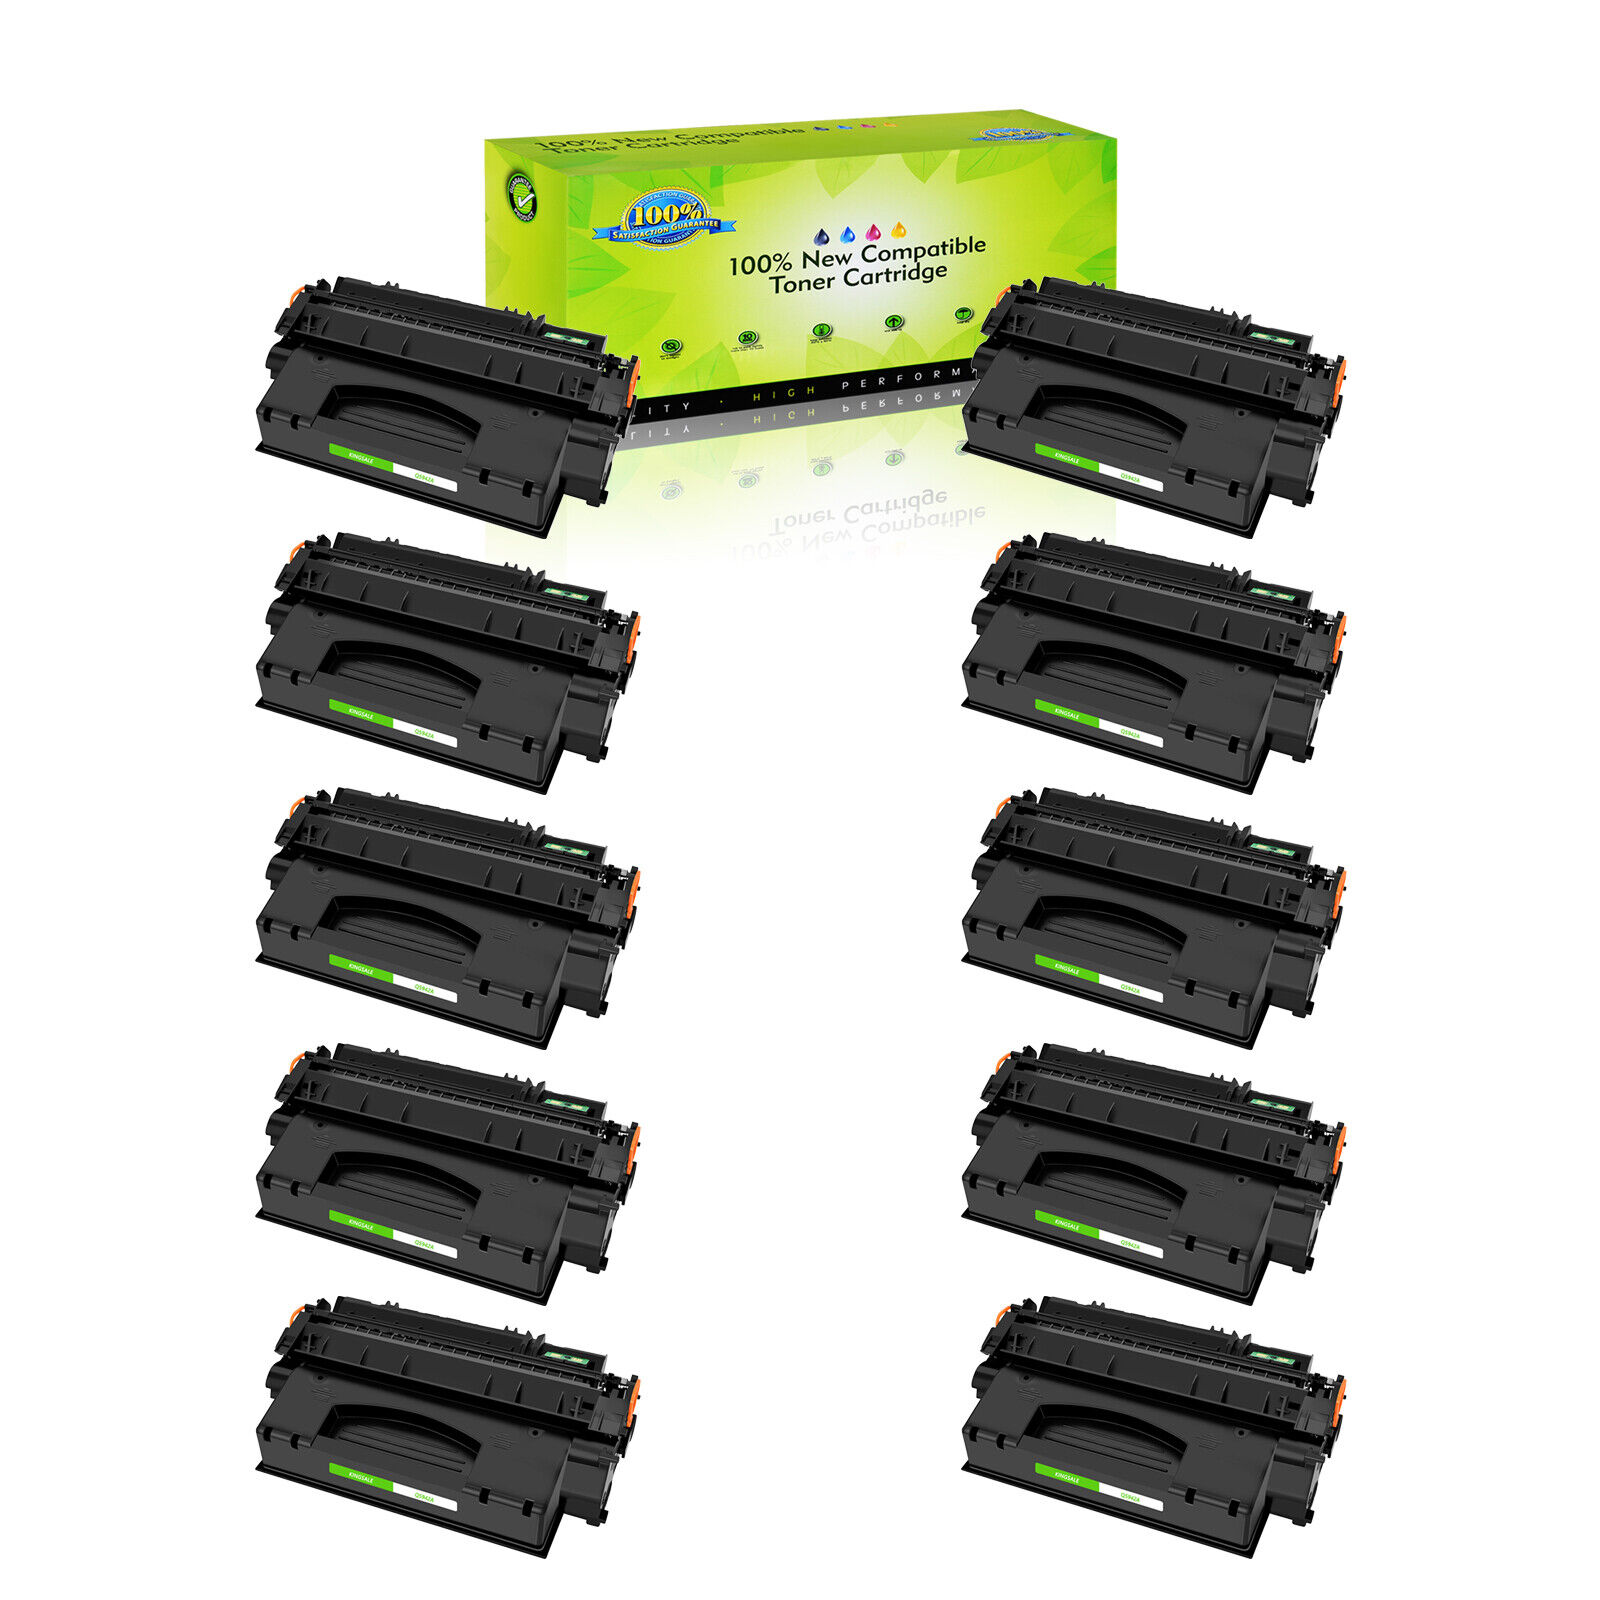 10PK Q5942A Toner Cartridge For HP Laserjet 4300 4300dtn 4300dtnsl 4300n 4300tn